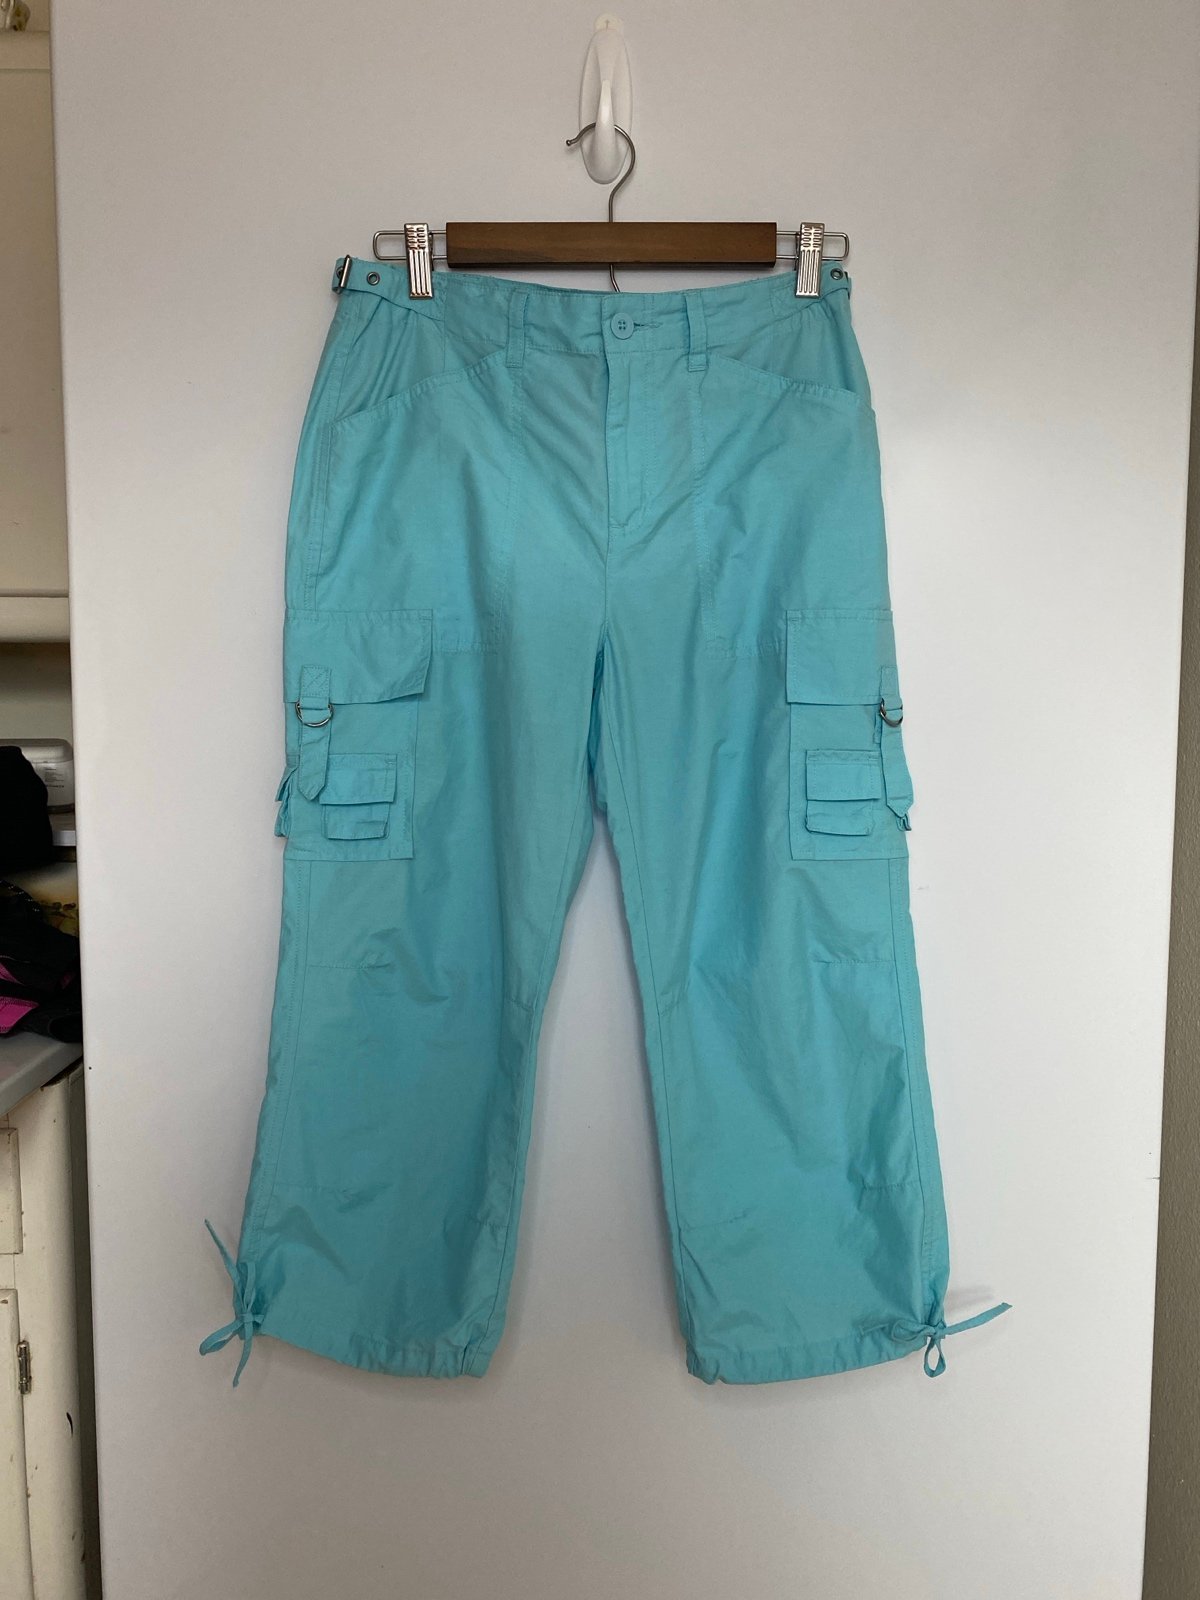 Exclusive Baileys point cotton blend cargo capri pants. Ladies size 7 kwloMc7Lw Novel 